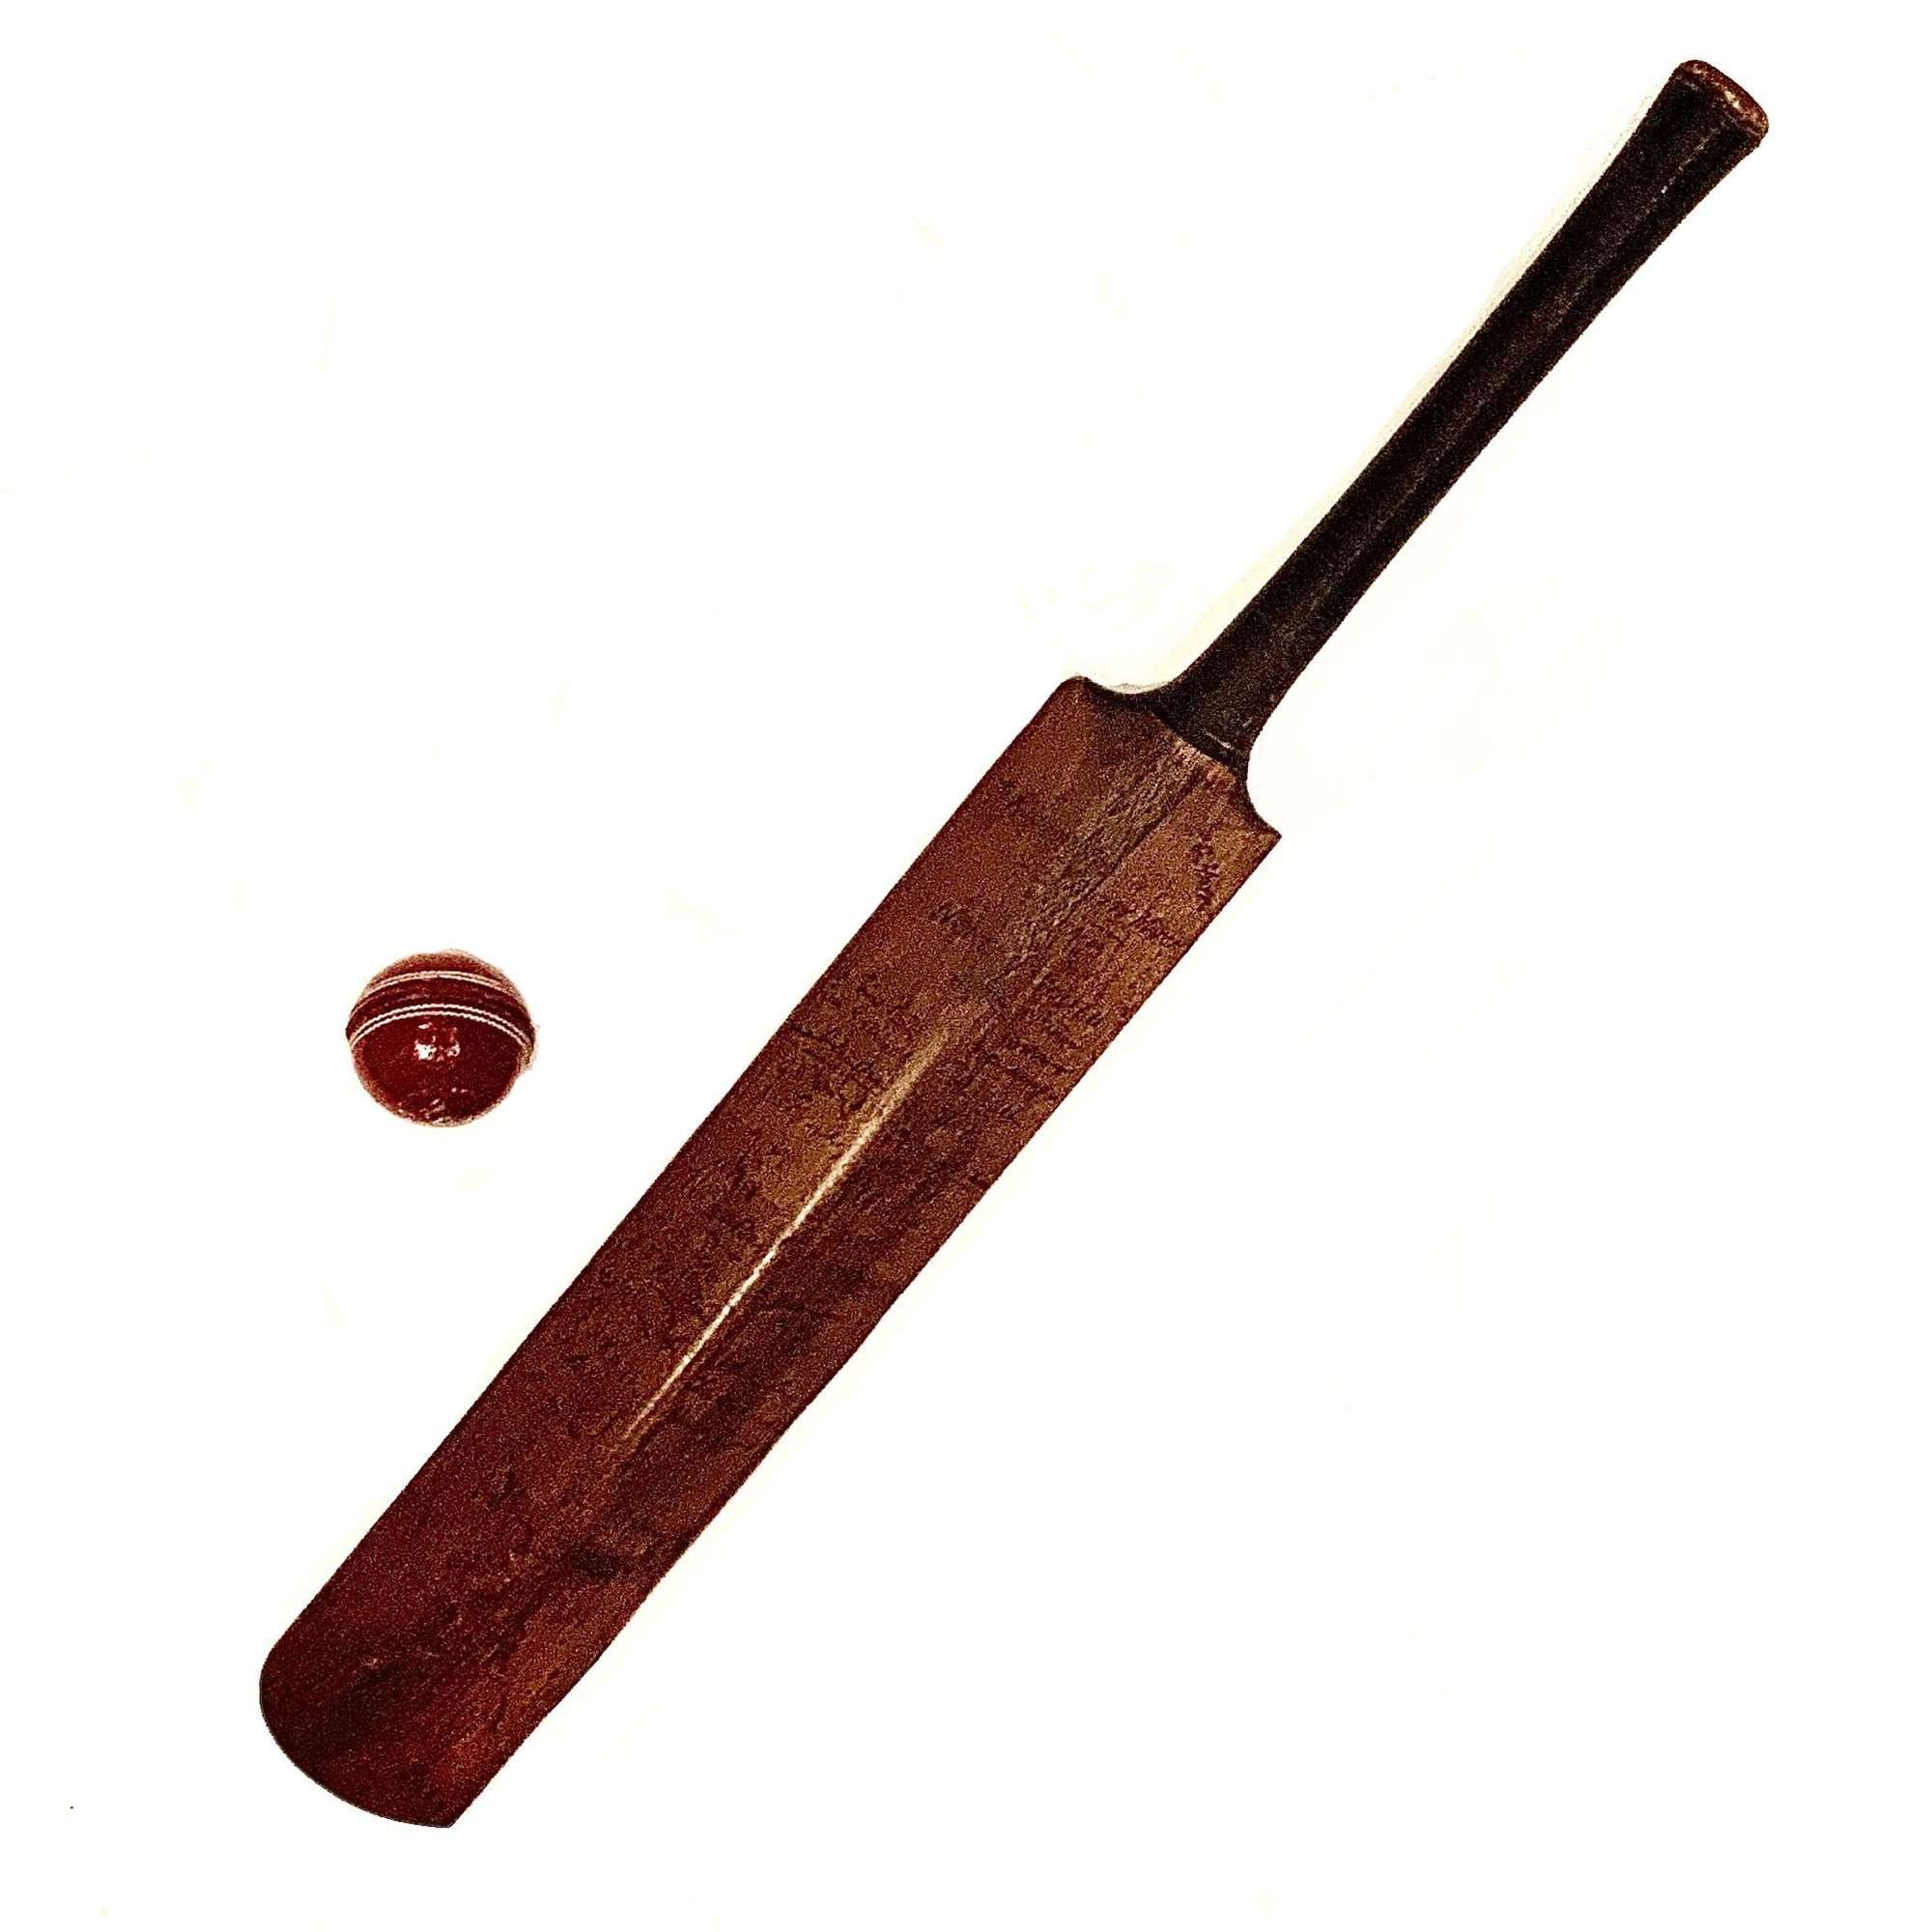 Rare & Historical Autographed 1908 “North v South” Match Cricket Bat